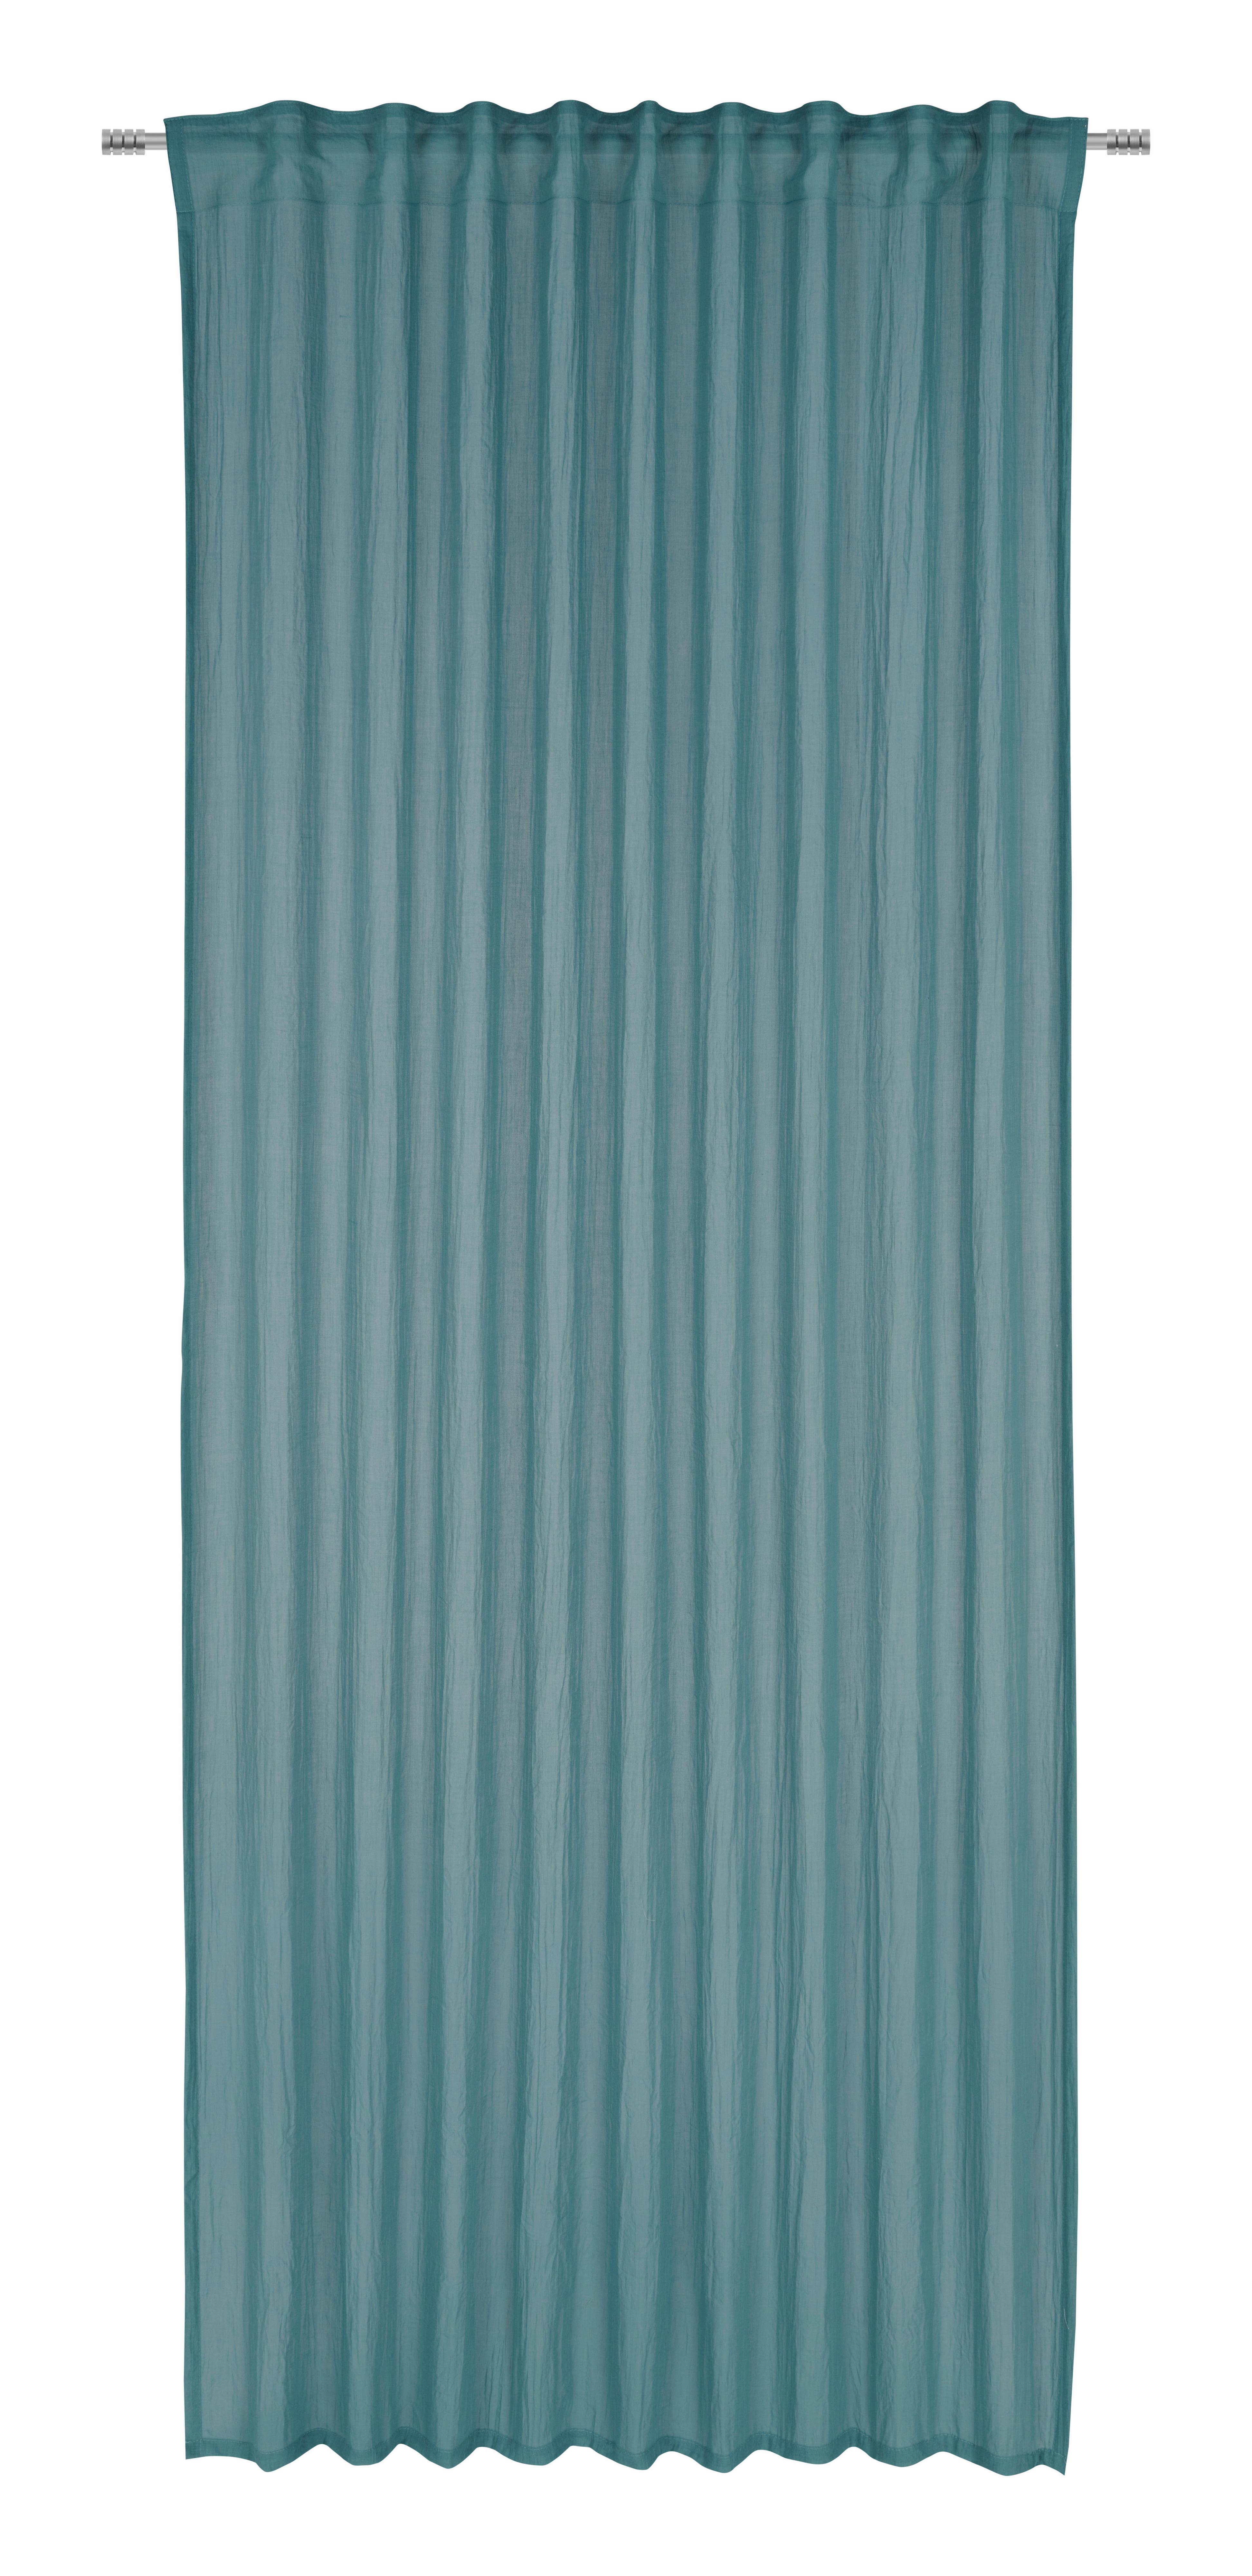 Končana Zavesa Ramona - svetlo modra, Moderno, tekstil (135/245cm) - Modern Living